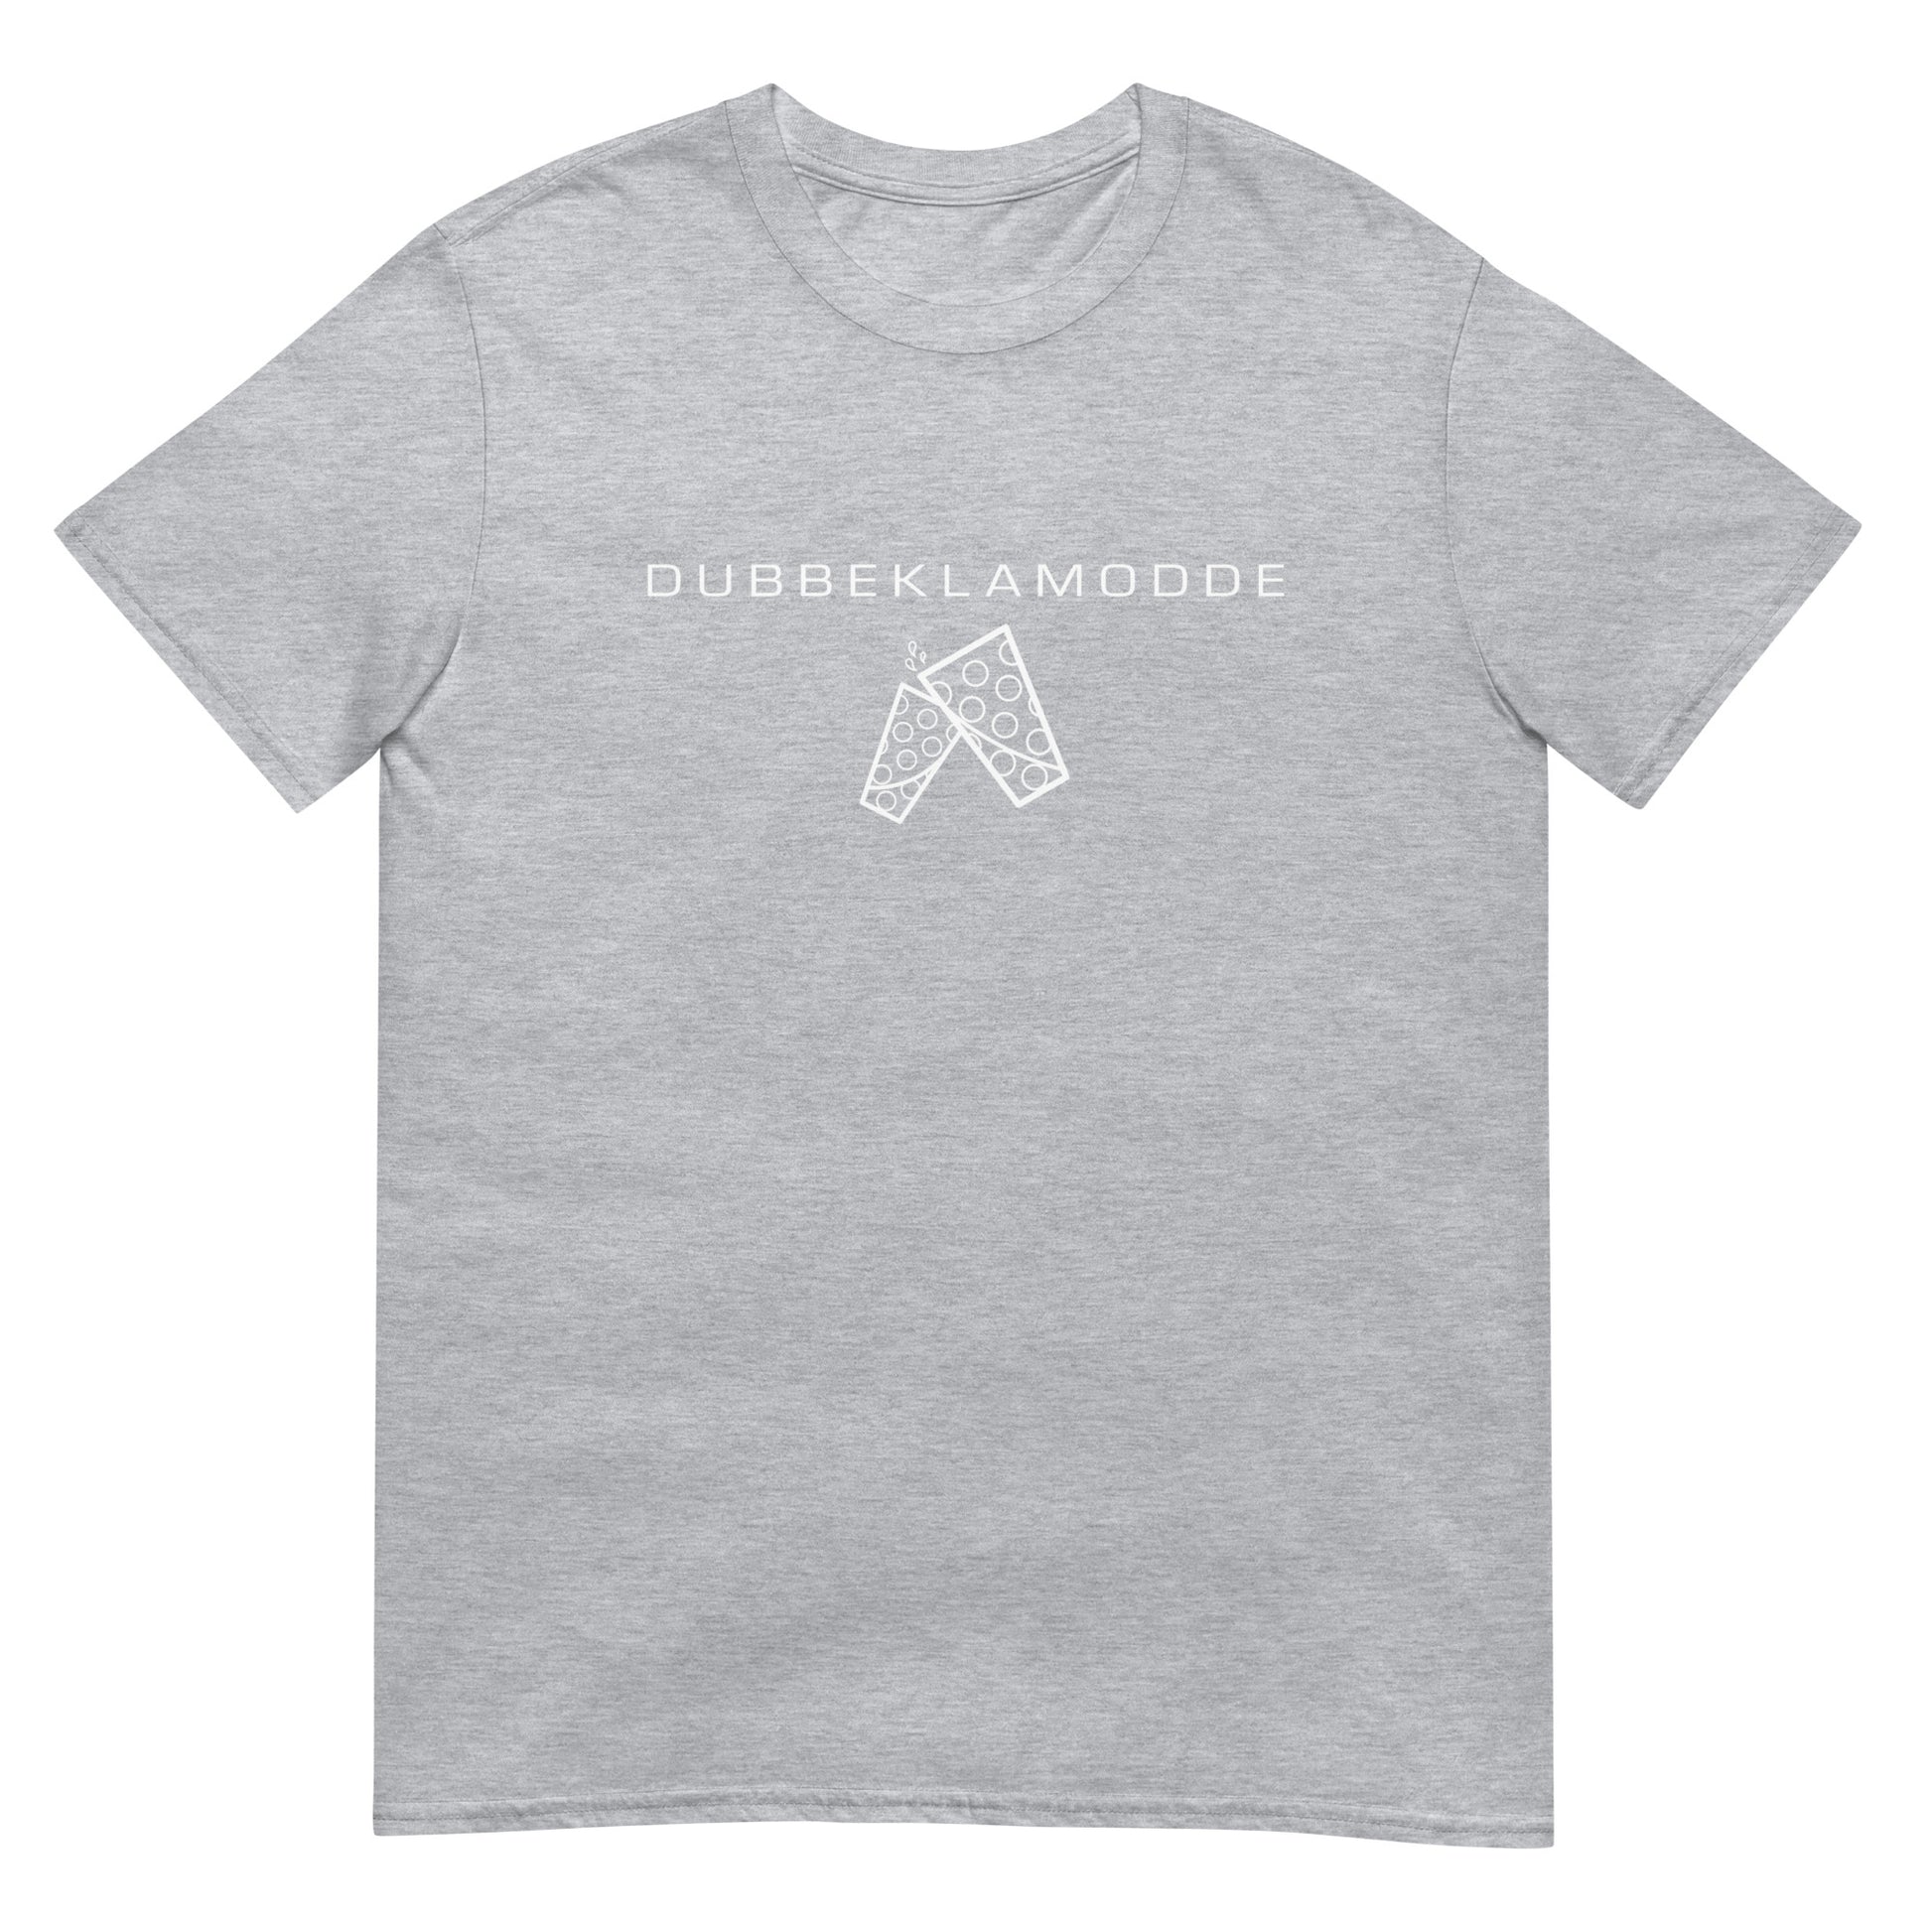 Dubbe Basic T-Shirt - DUBBEKLAMODDE